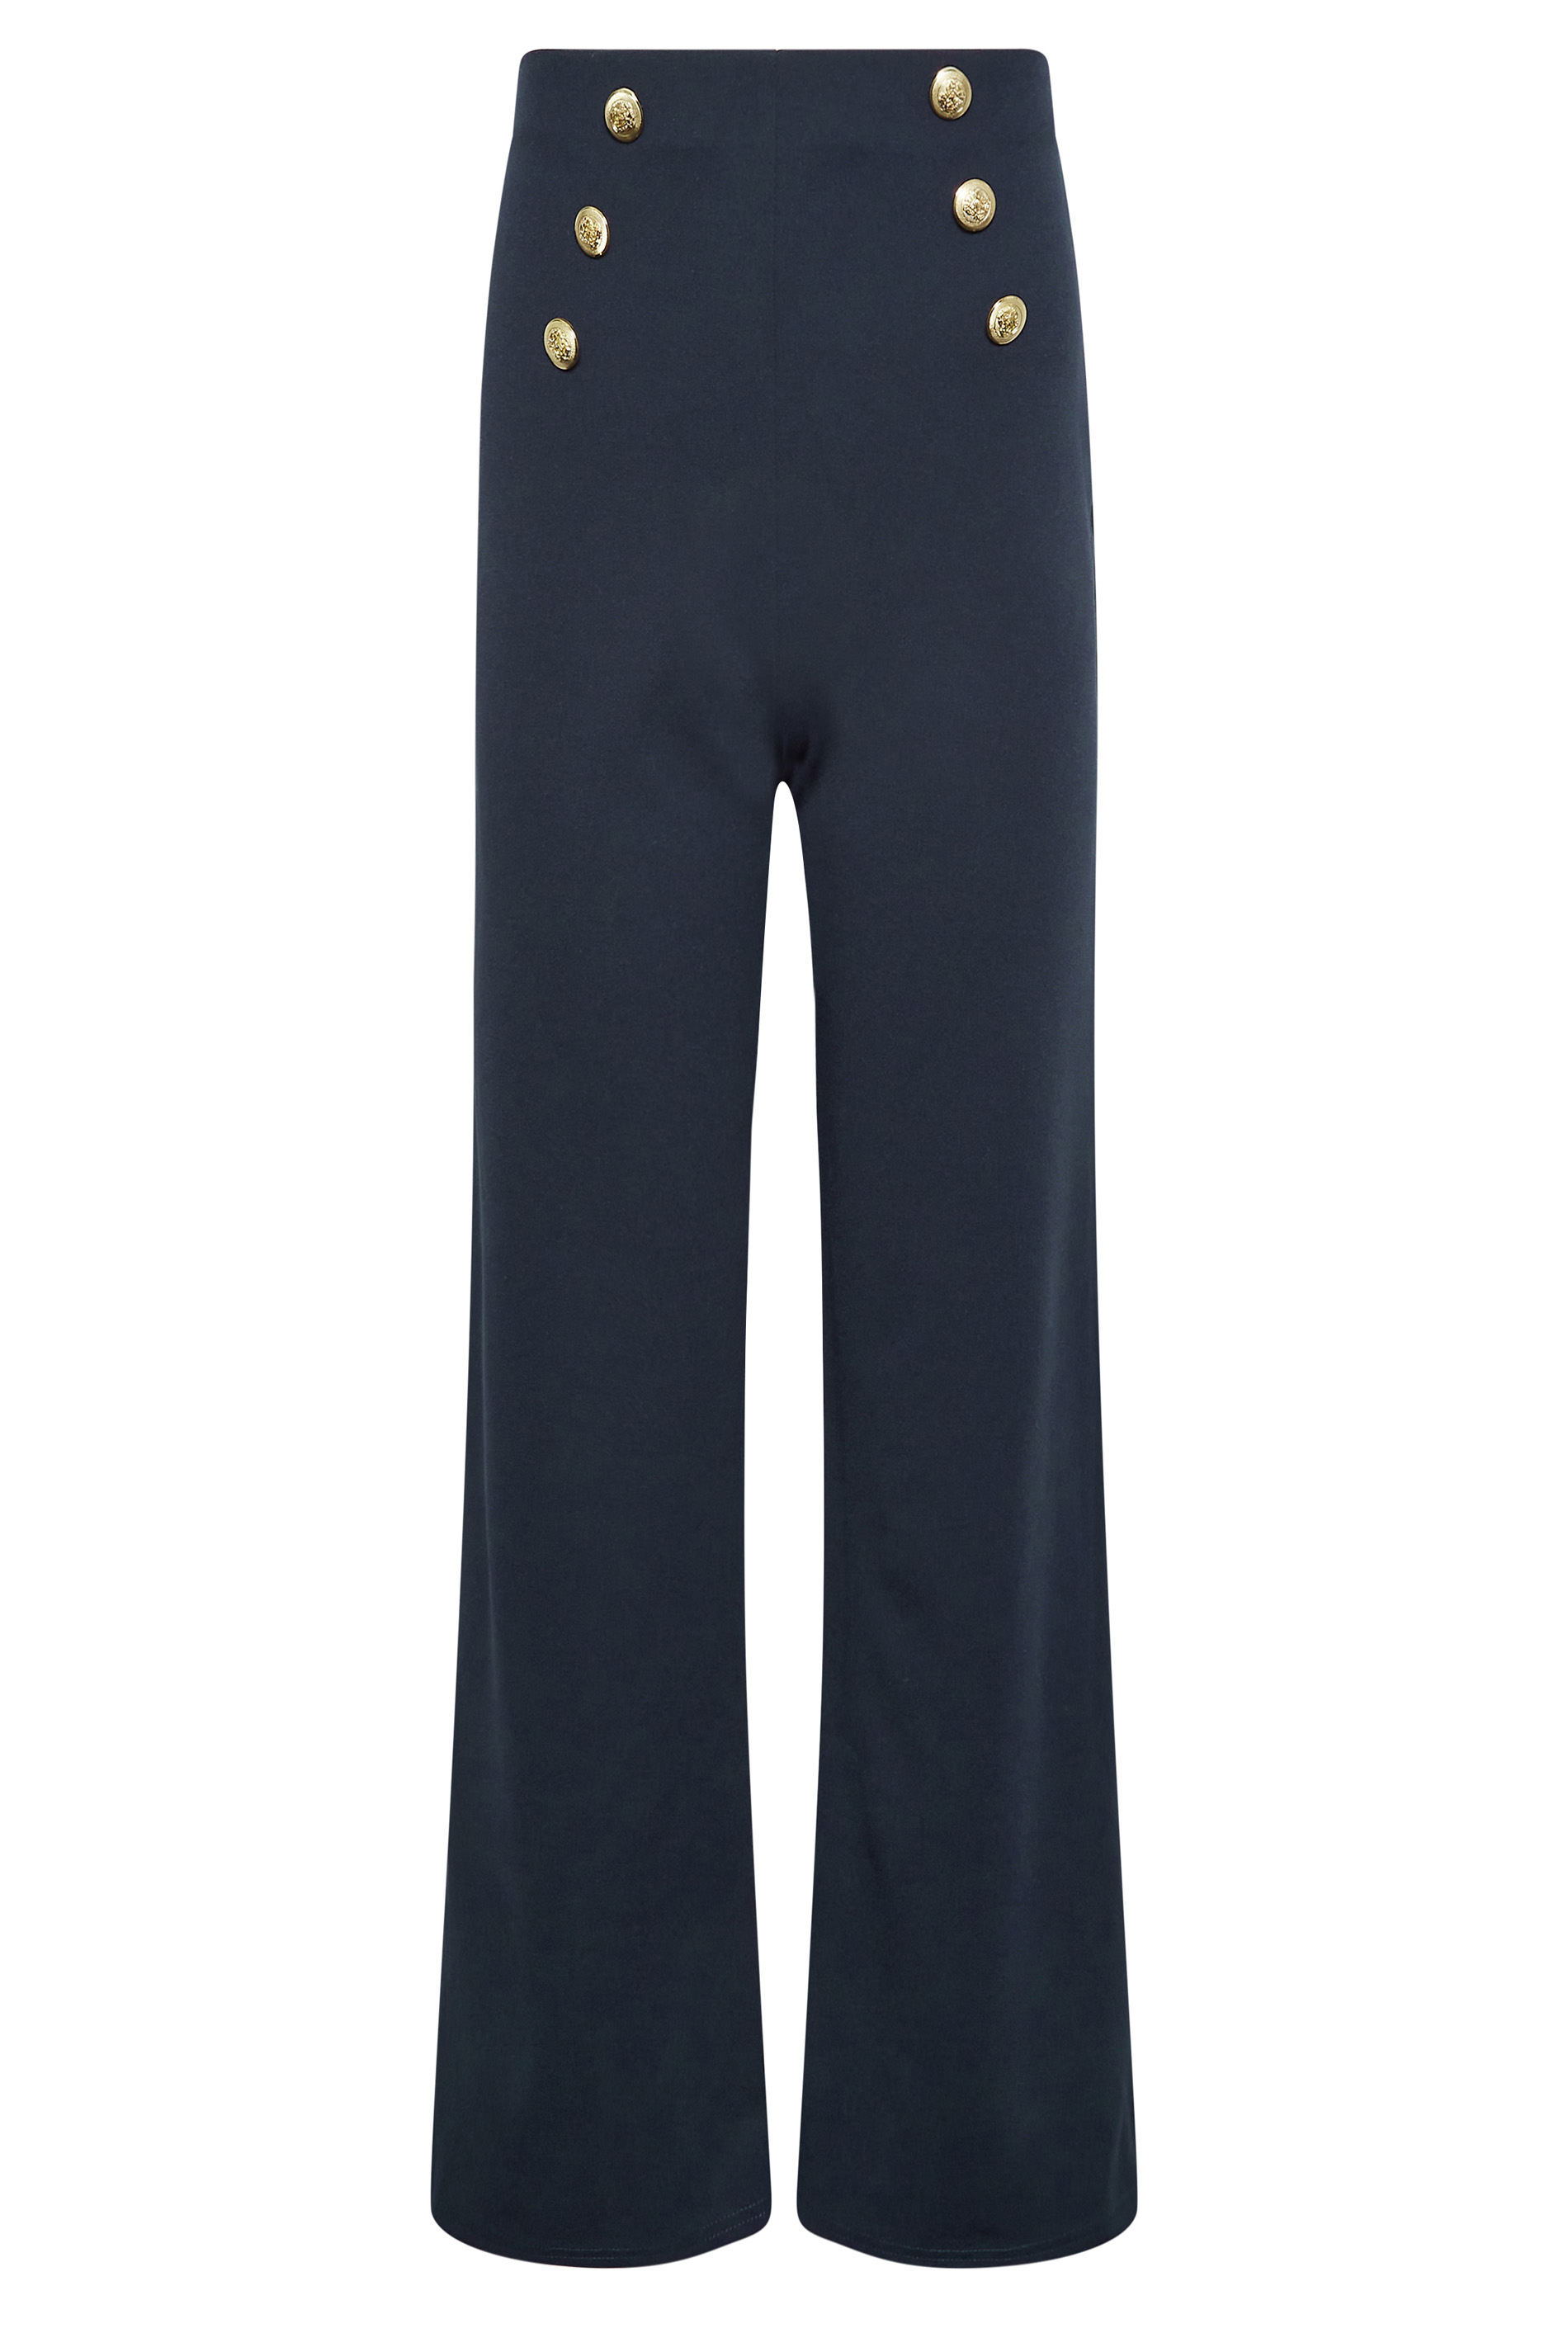 Benchmark Trousers Work Trousers, Women, Navy Blue, Poly-Cotton, Waist 34,  Leg 33, Long, Size 16 T24 NAVY T 16